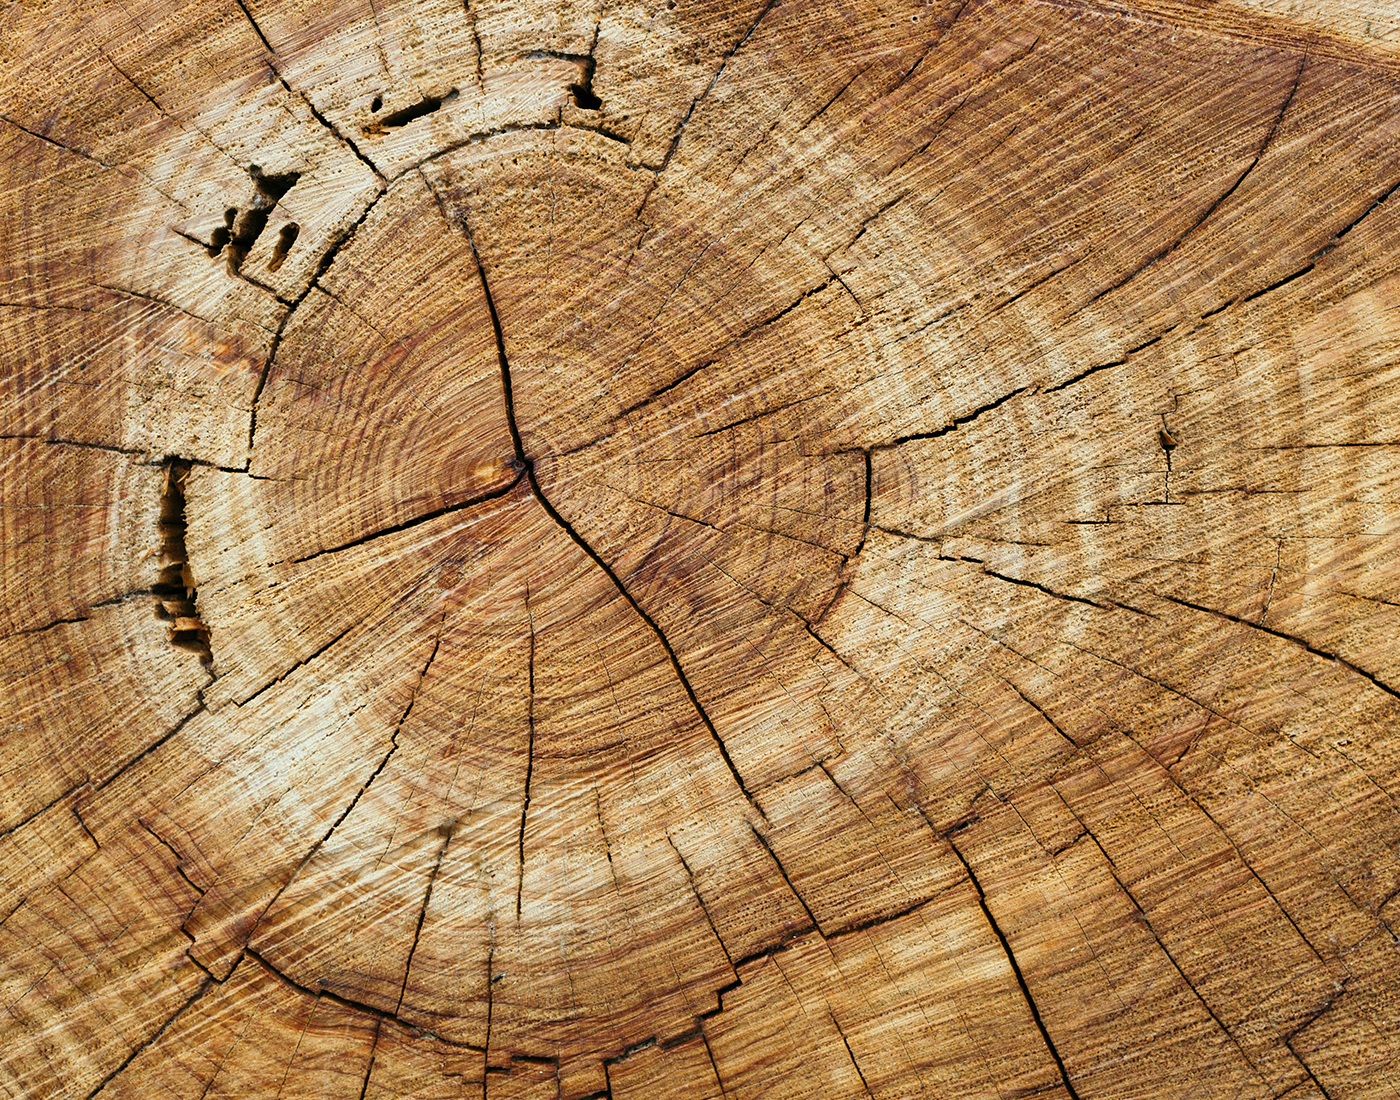 Circular wood rings of a tree.